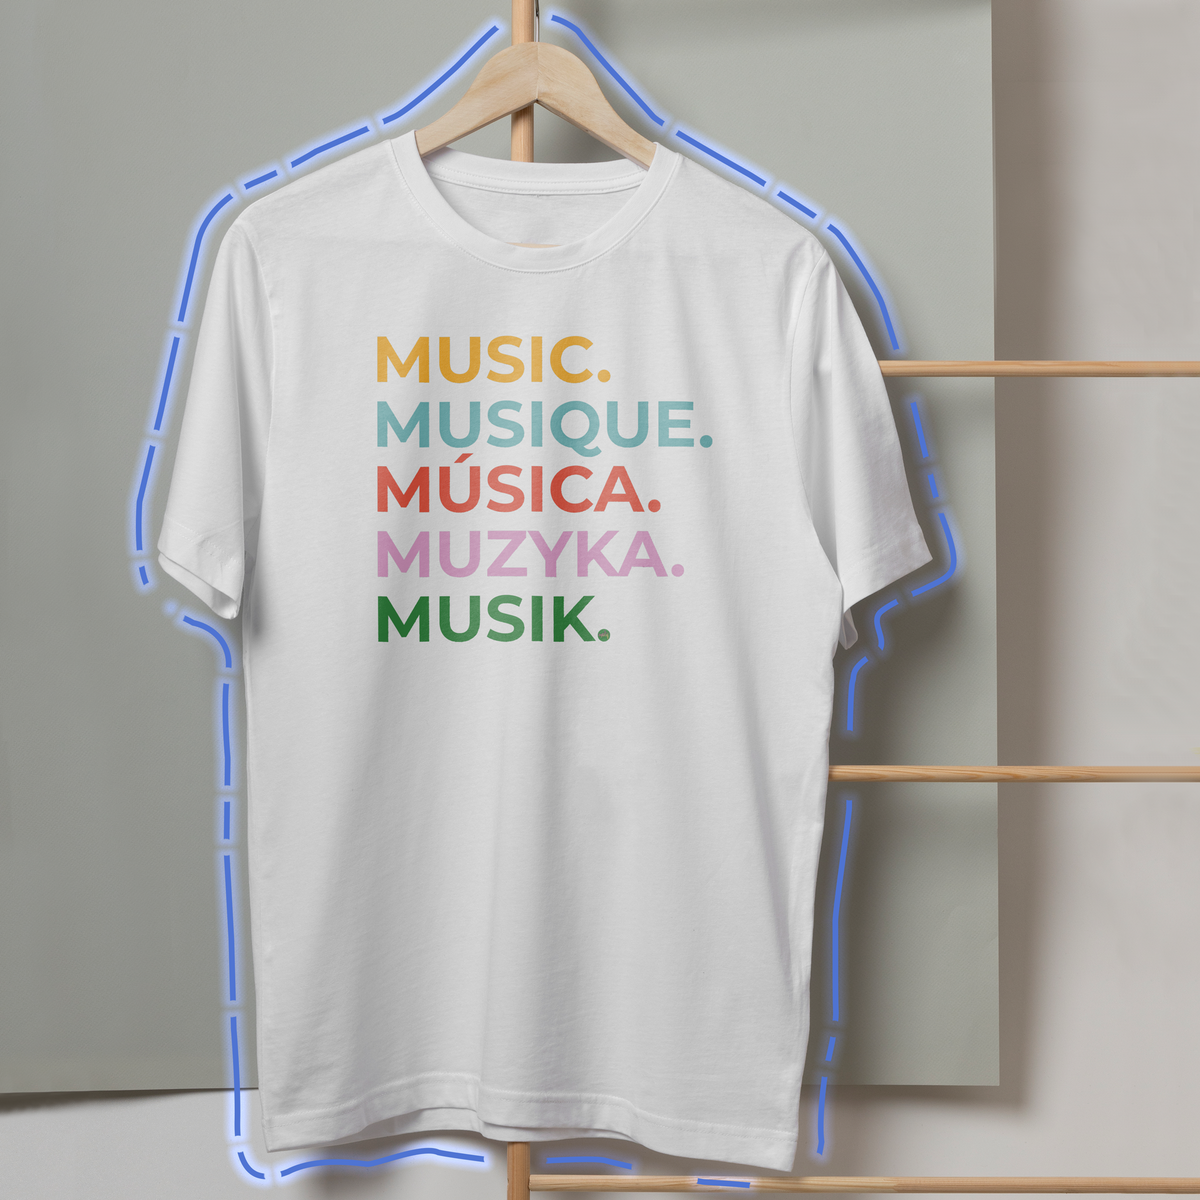 Nome do produto: Music. Musique. Música. Musyka. Musik.